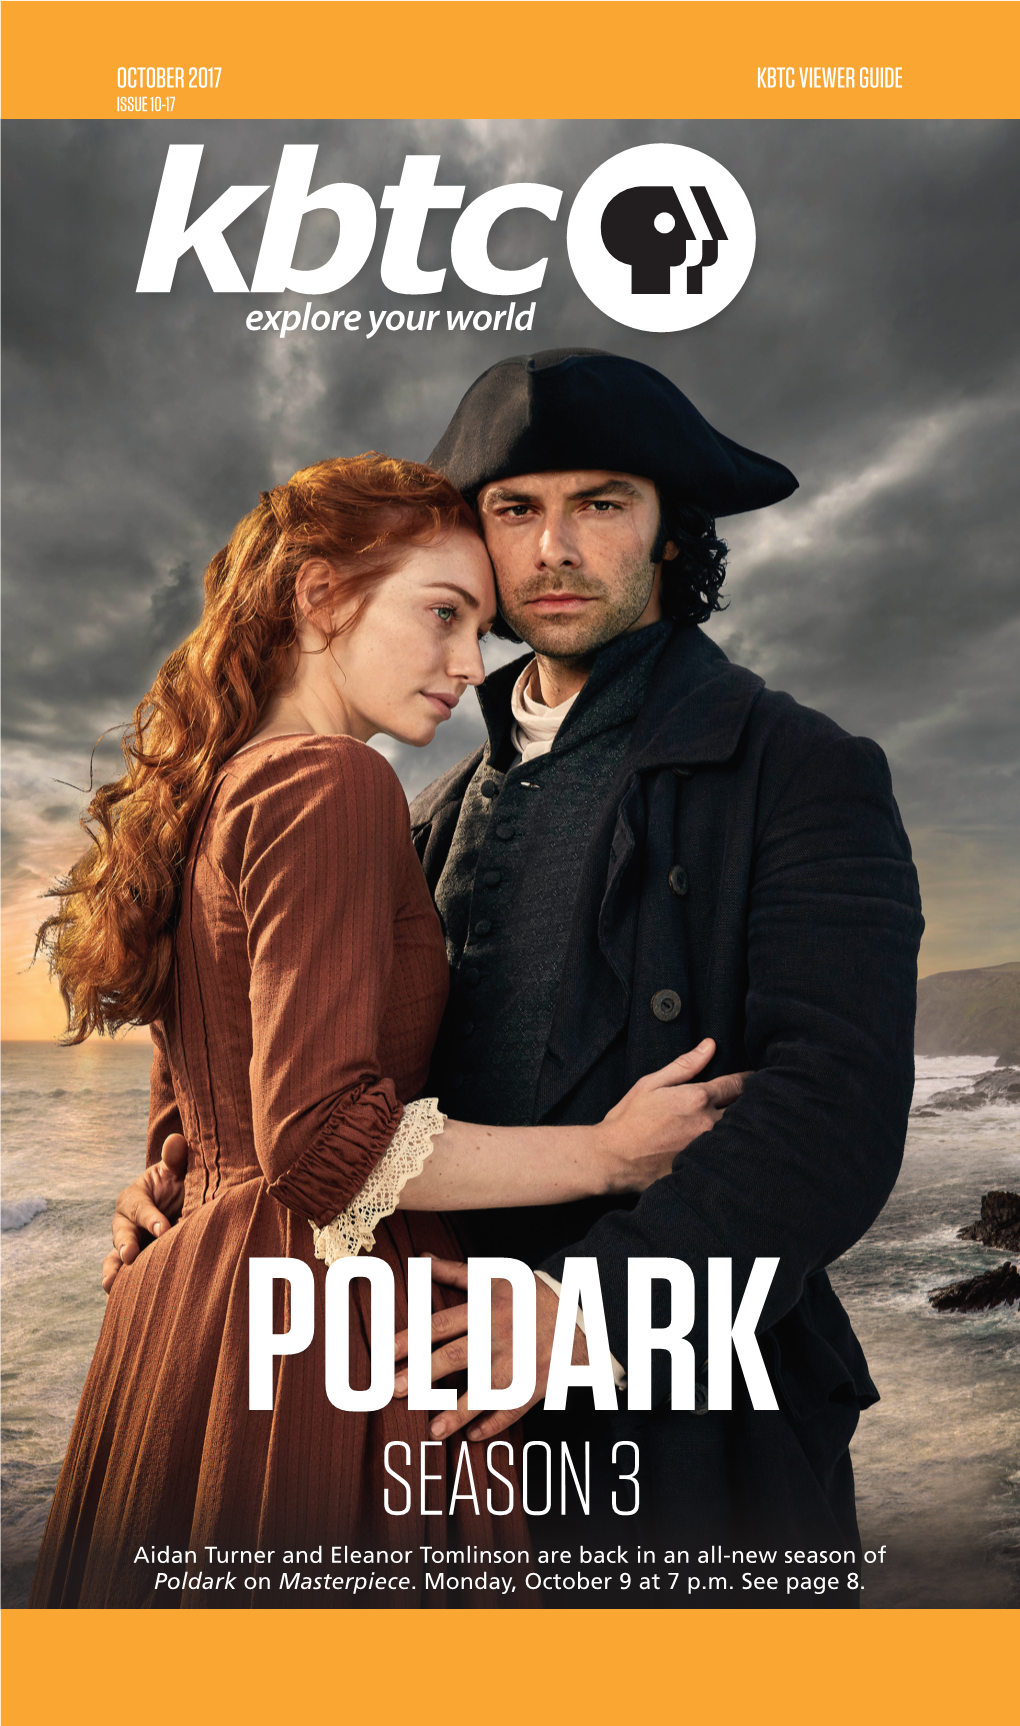 SEASON 3 Aidan Turner and Eleanor Tomlinson Are Back in an All-New Season of Poldark on Masterpiece